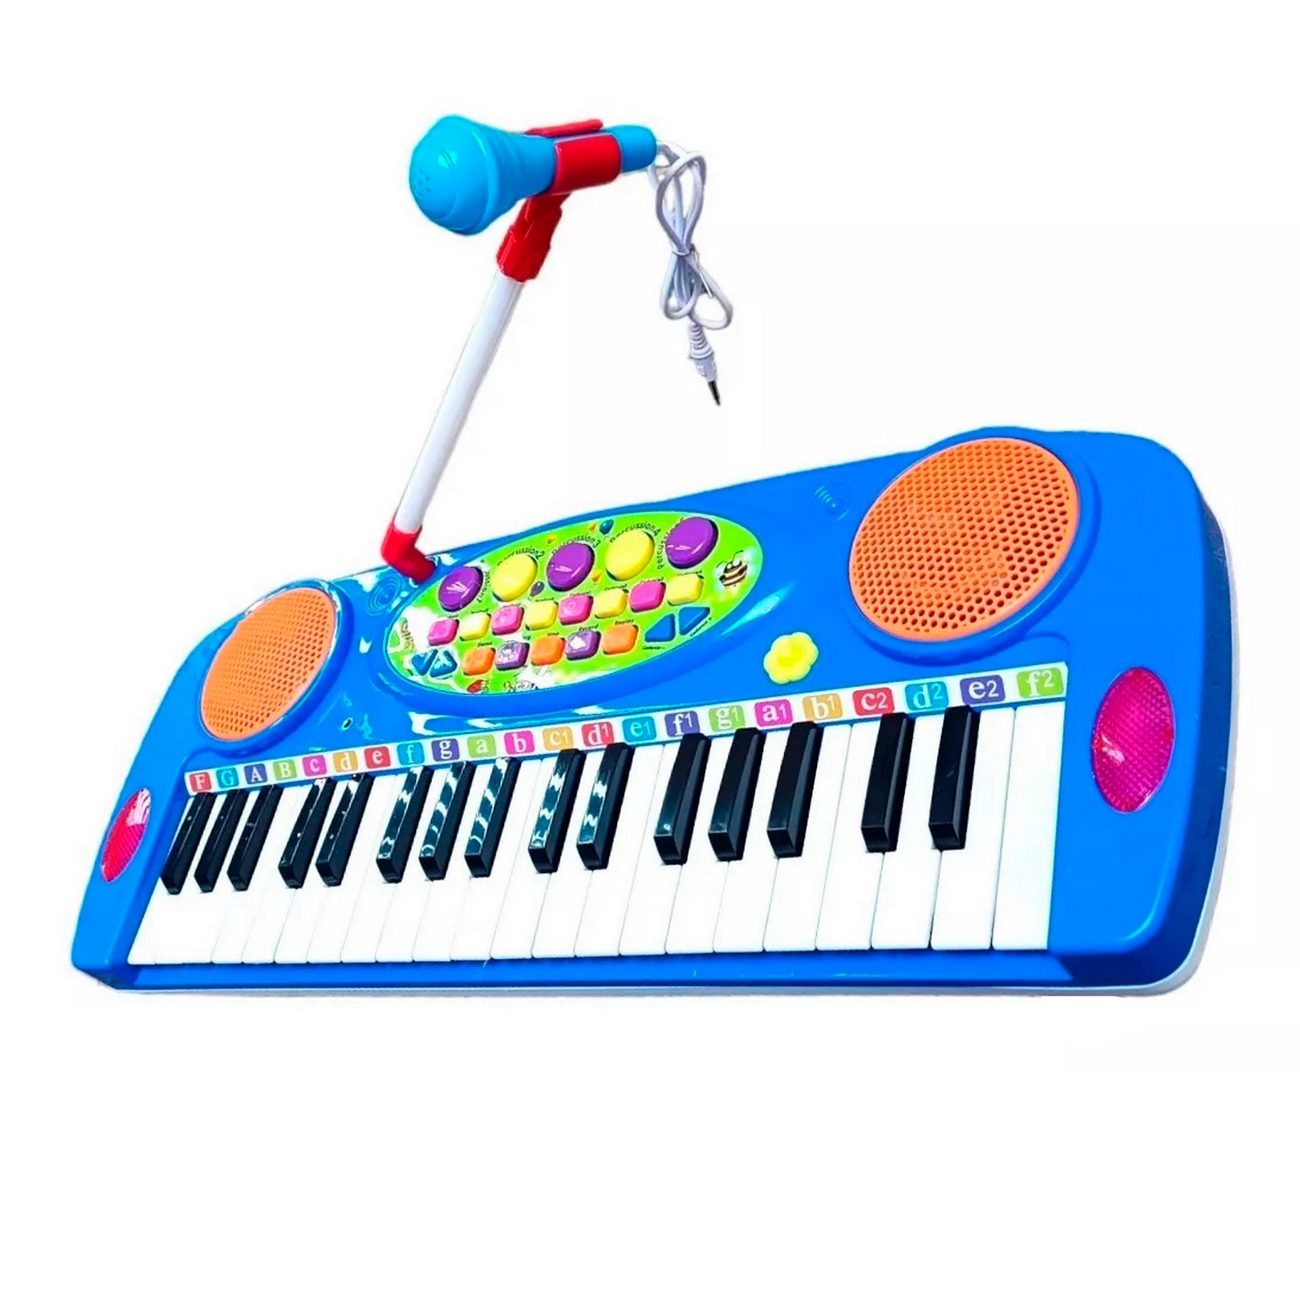 Piano Organeta Teclado Musical Bebes Niño Juguete + Baterias